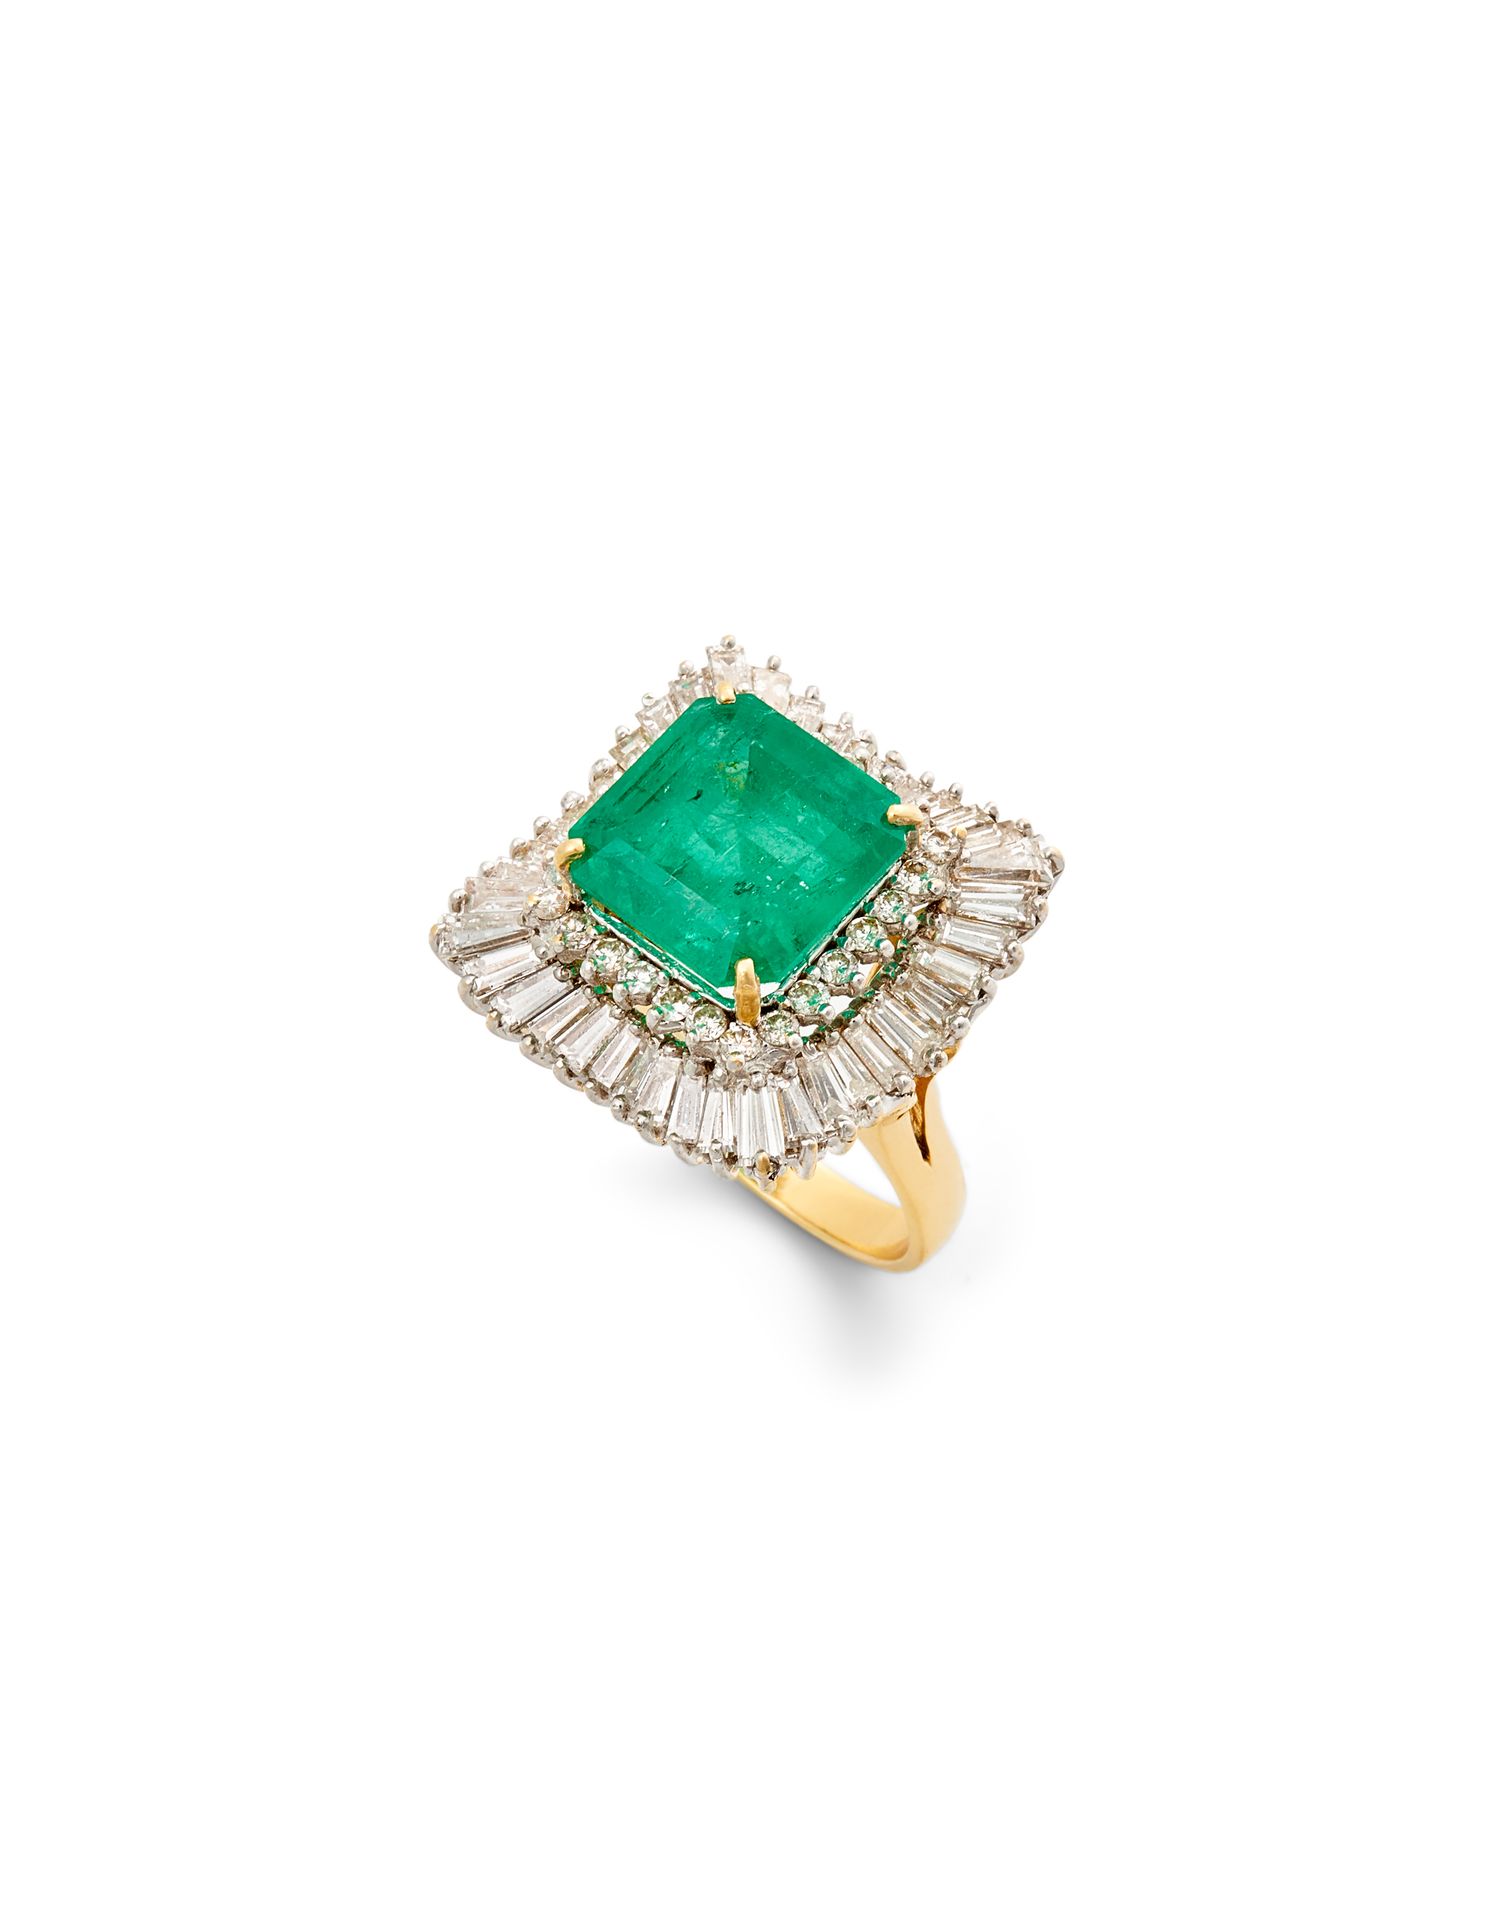 Null 1970年代 绿宝石戒指 18K白金和黄金，镶嵌+/-12.5克拉绿宝石，周围有40颗长方形切割和26颗明亮型切割钻石。

镶嵌+/-12.5克拉的祖&hellip;